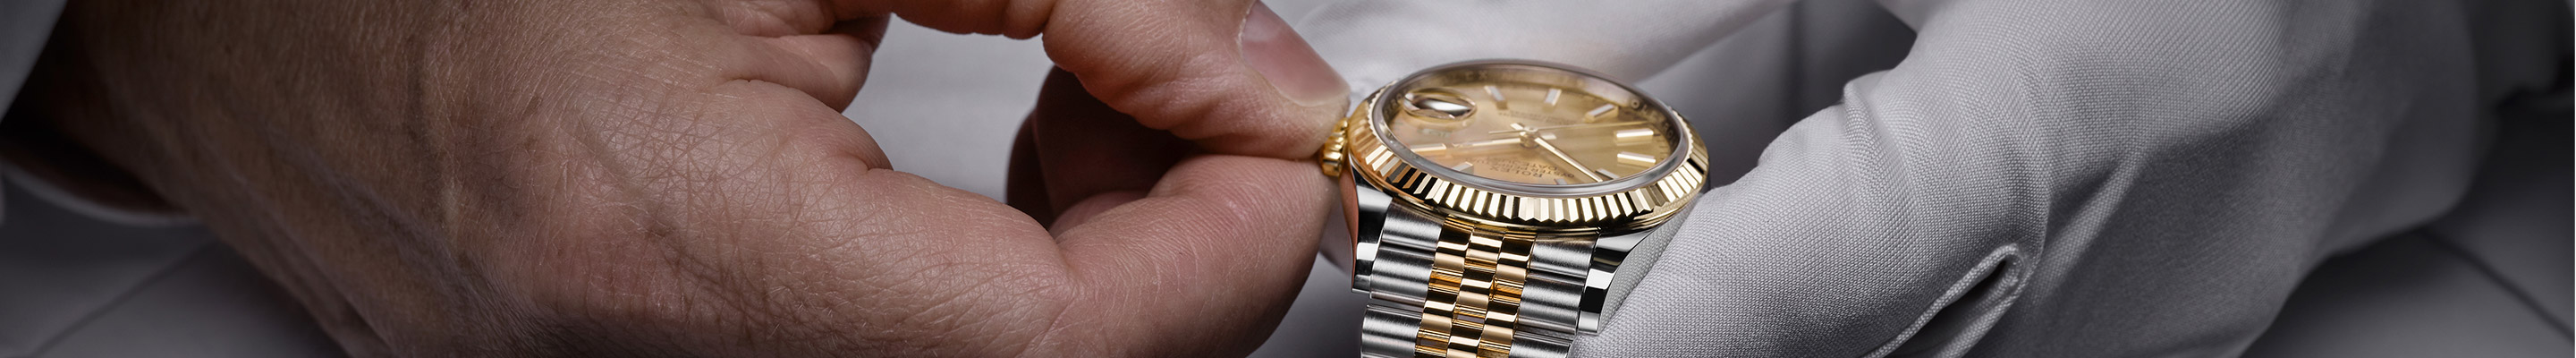 Rolex Watch Servicing and Repair at William Barthman